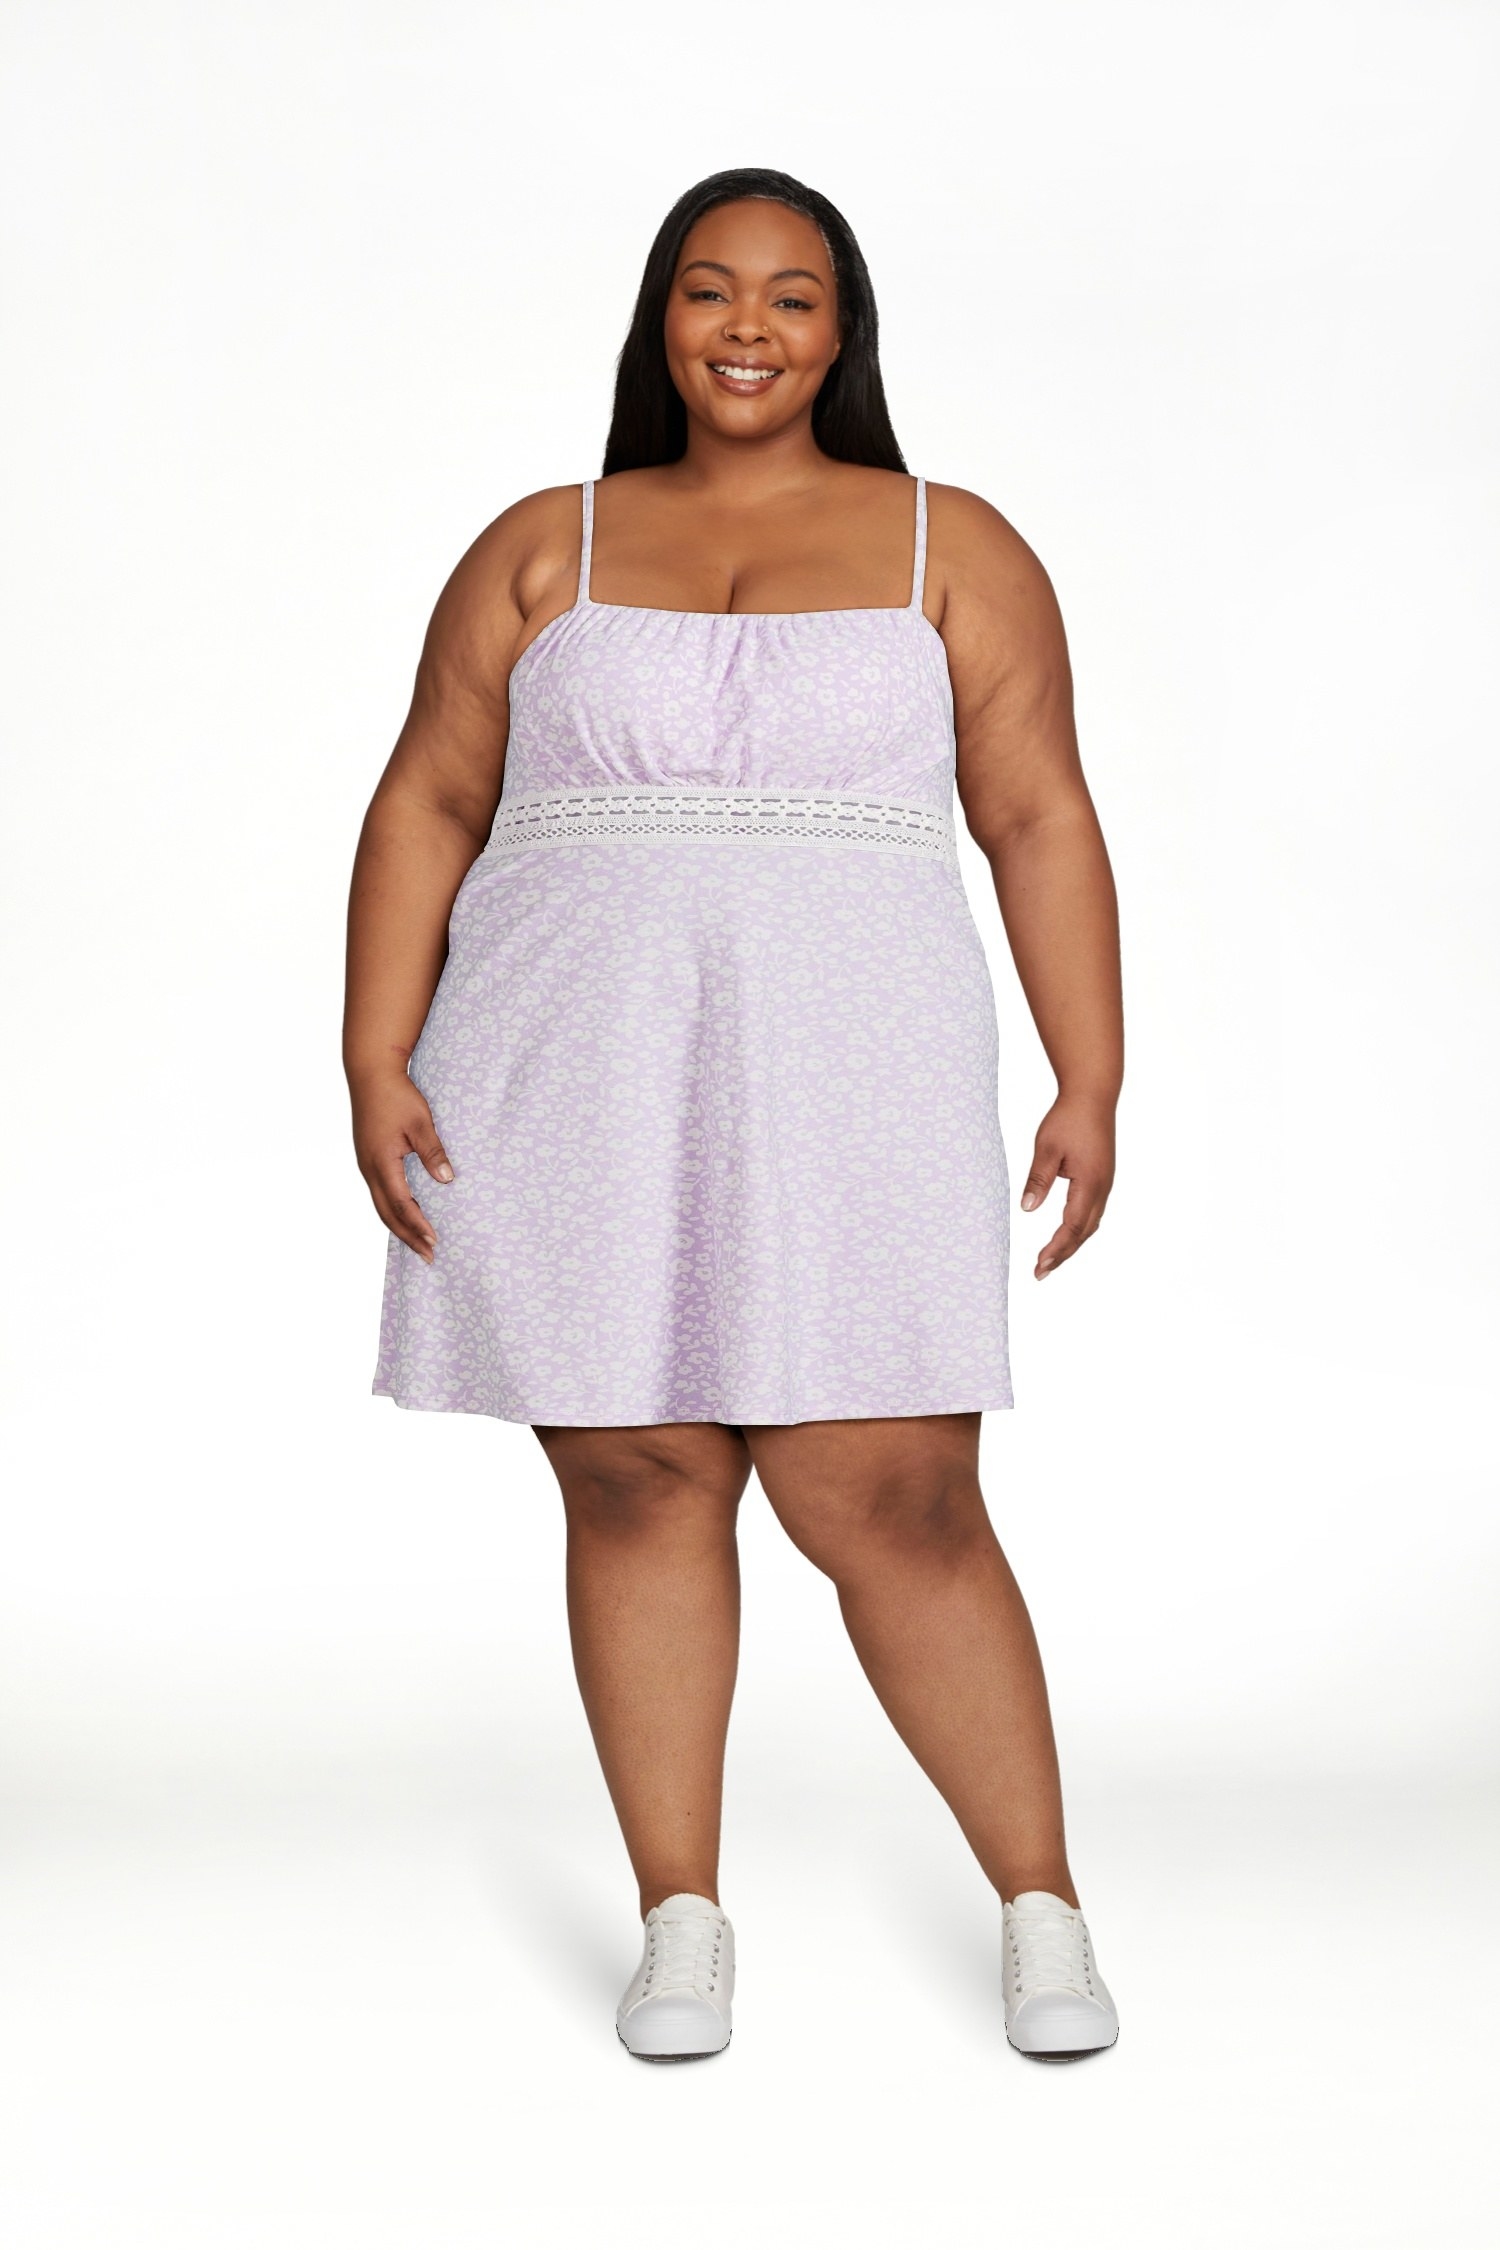 a model wearing the dress in lavender